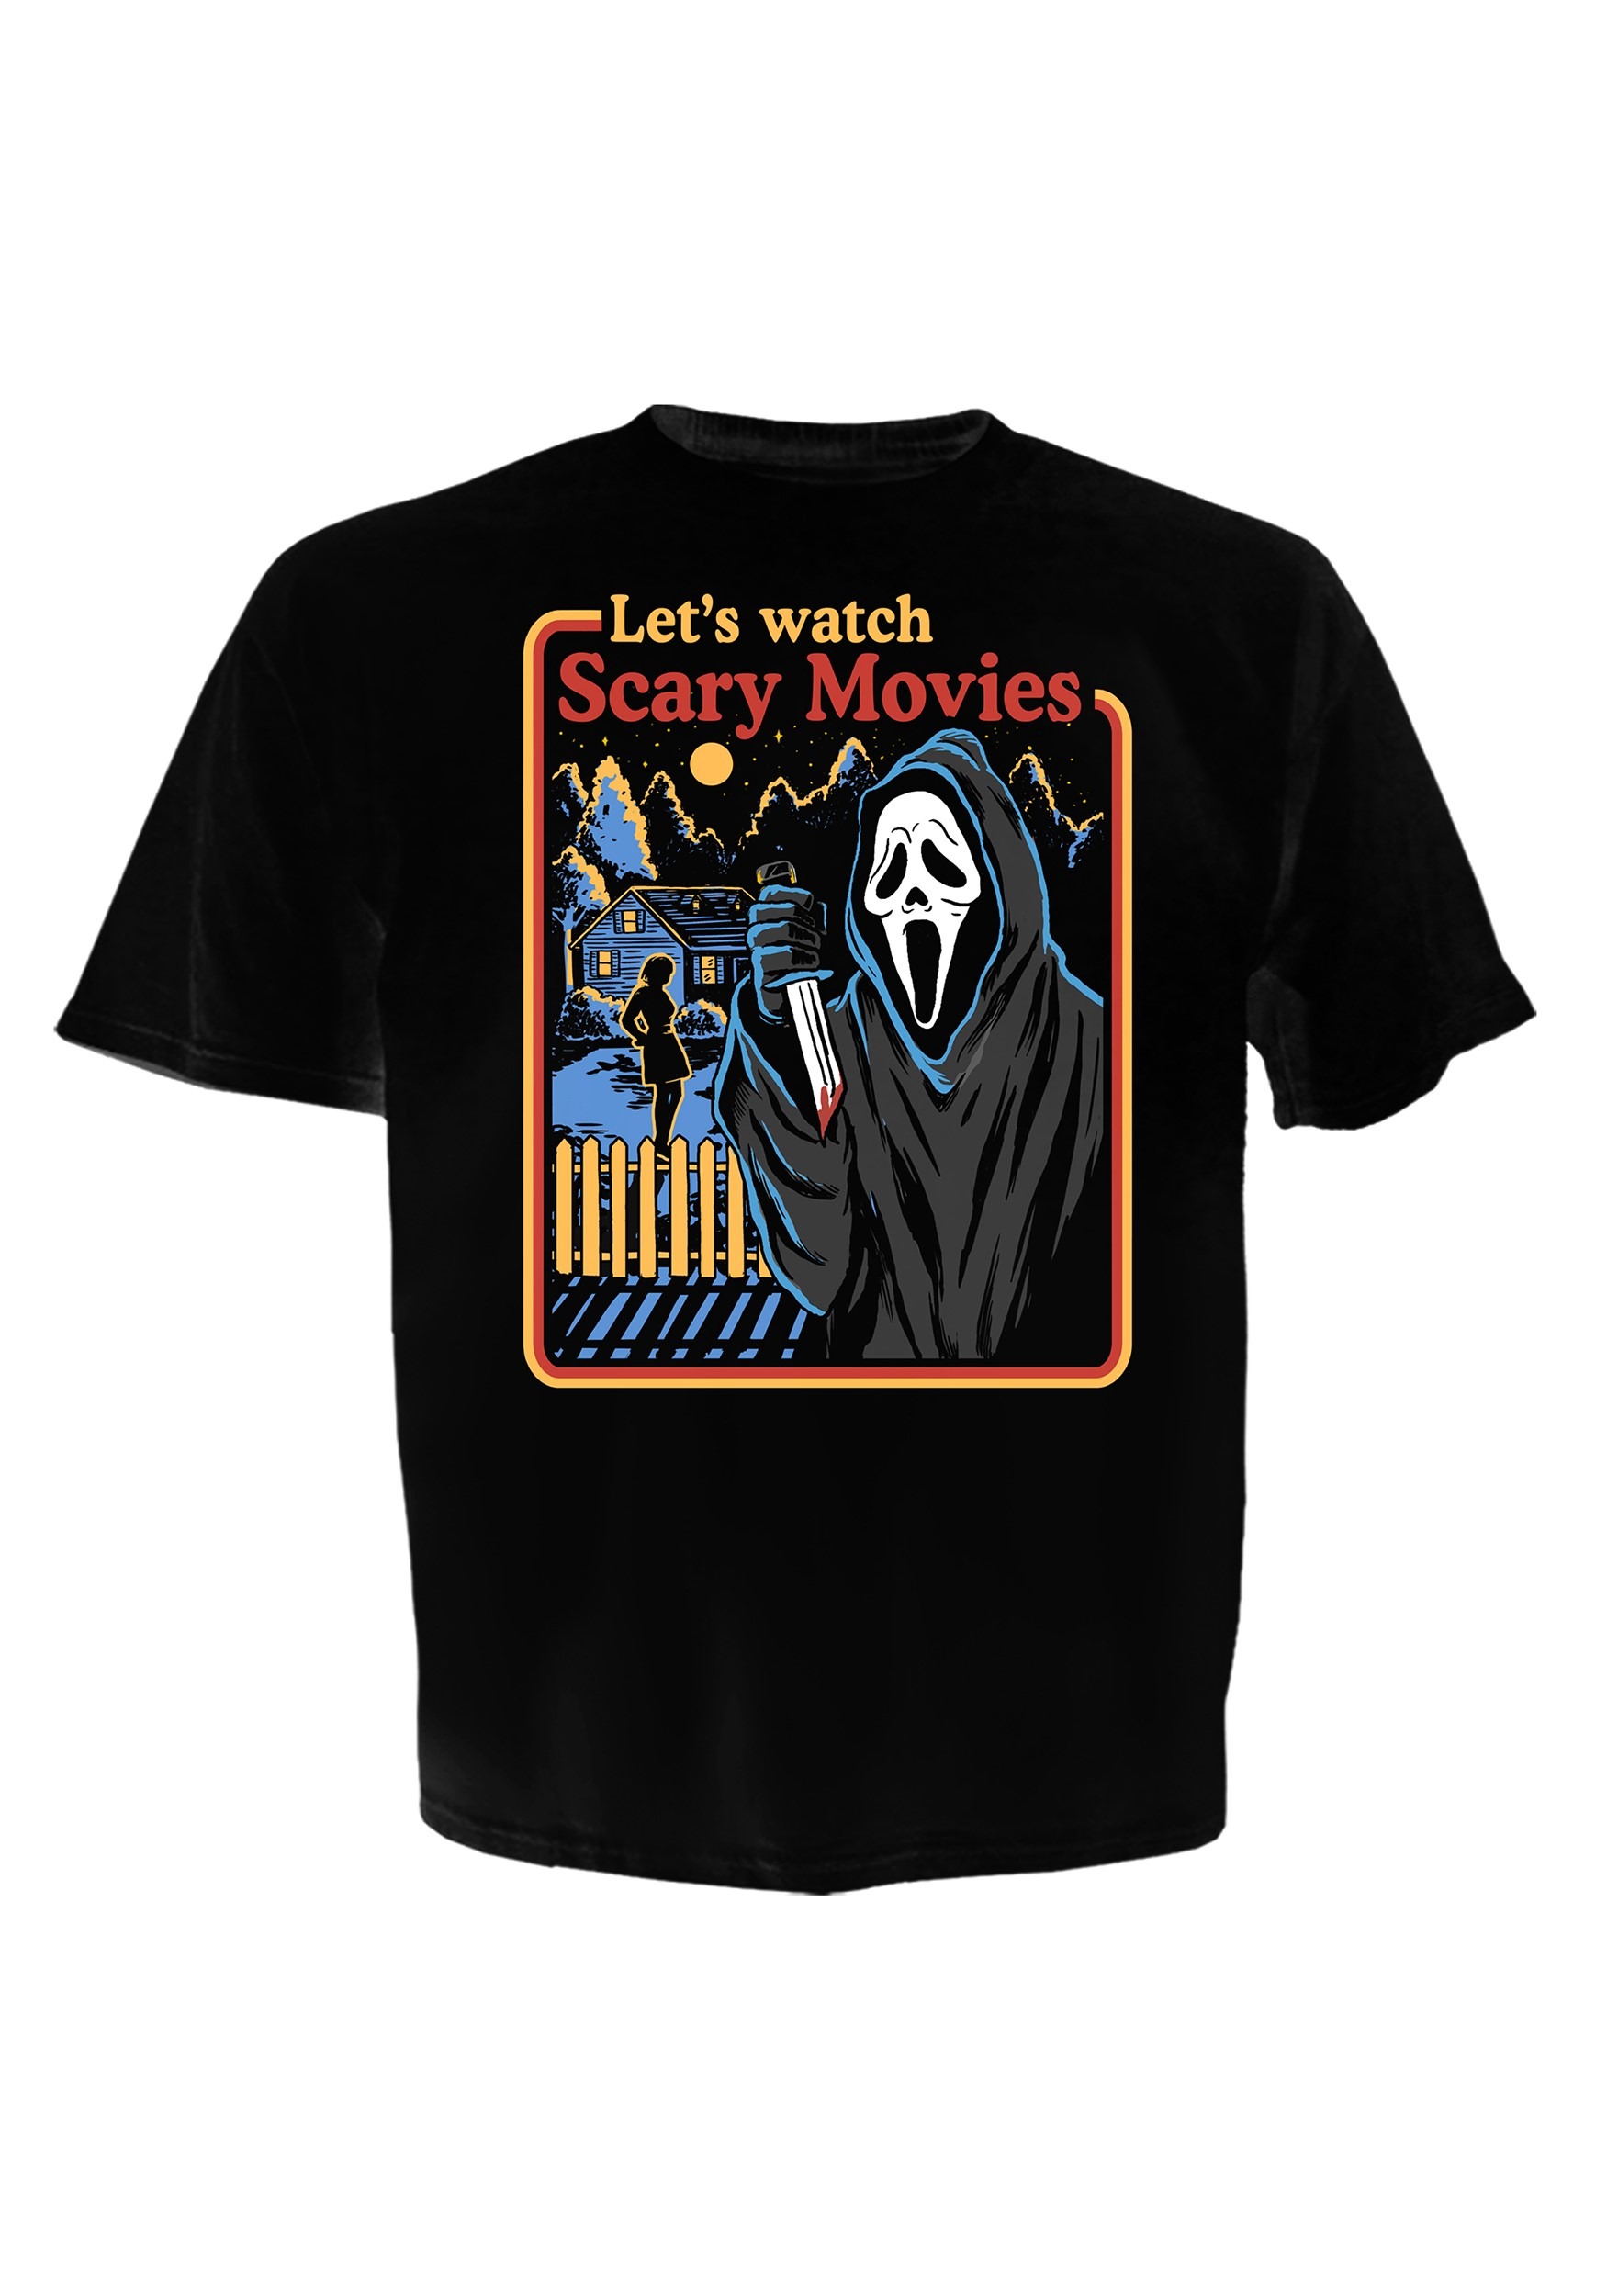 Mens Black Scream Ghost Face T-Shirt Scary Movie Halloween Horror TShirt